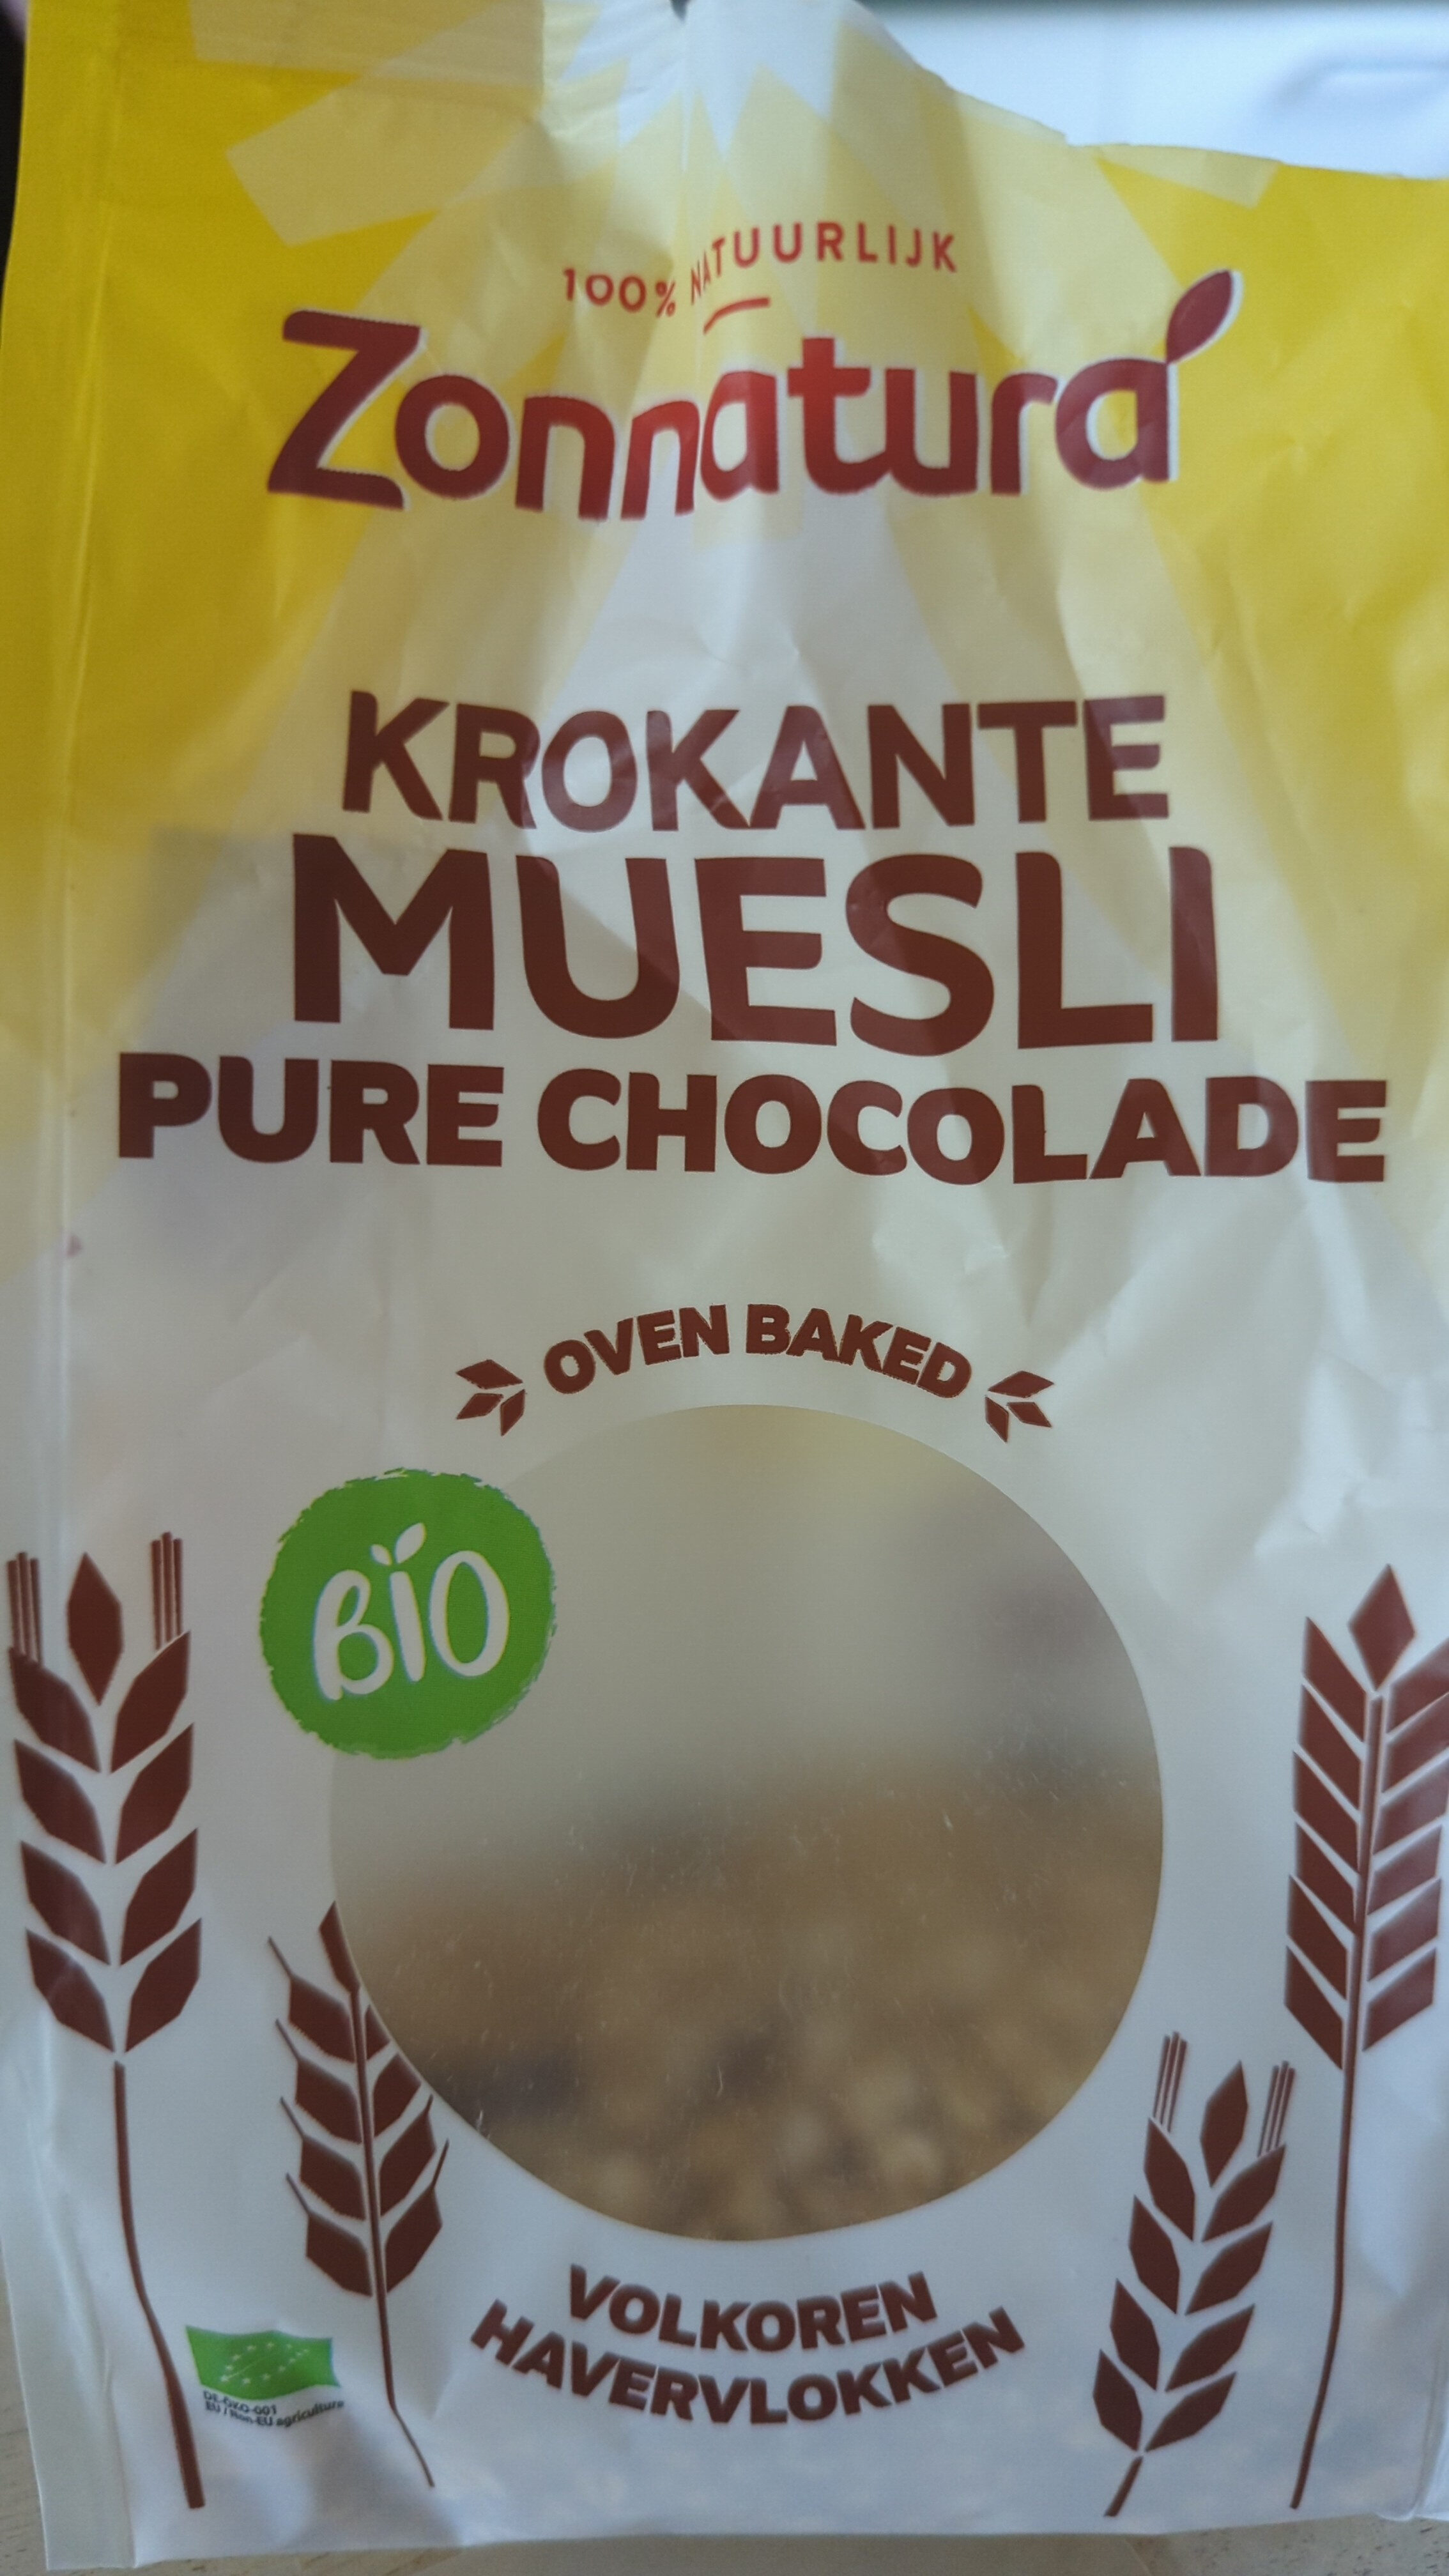 Krokante Muesli pure chocolade - Produkt - nl